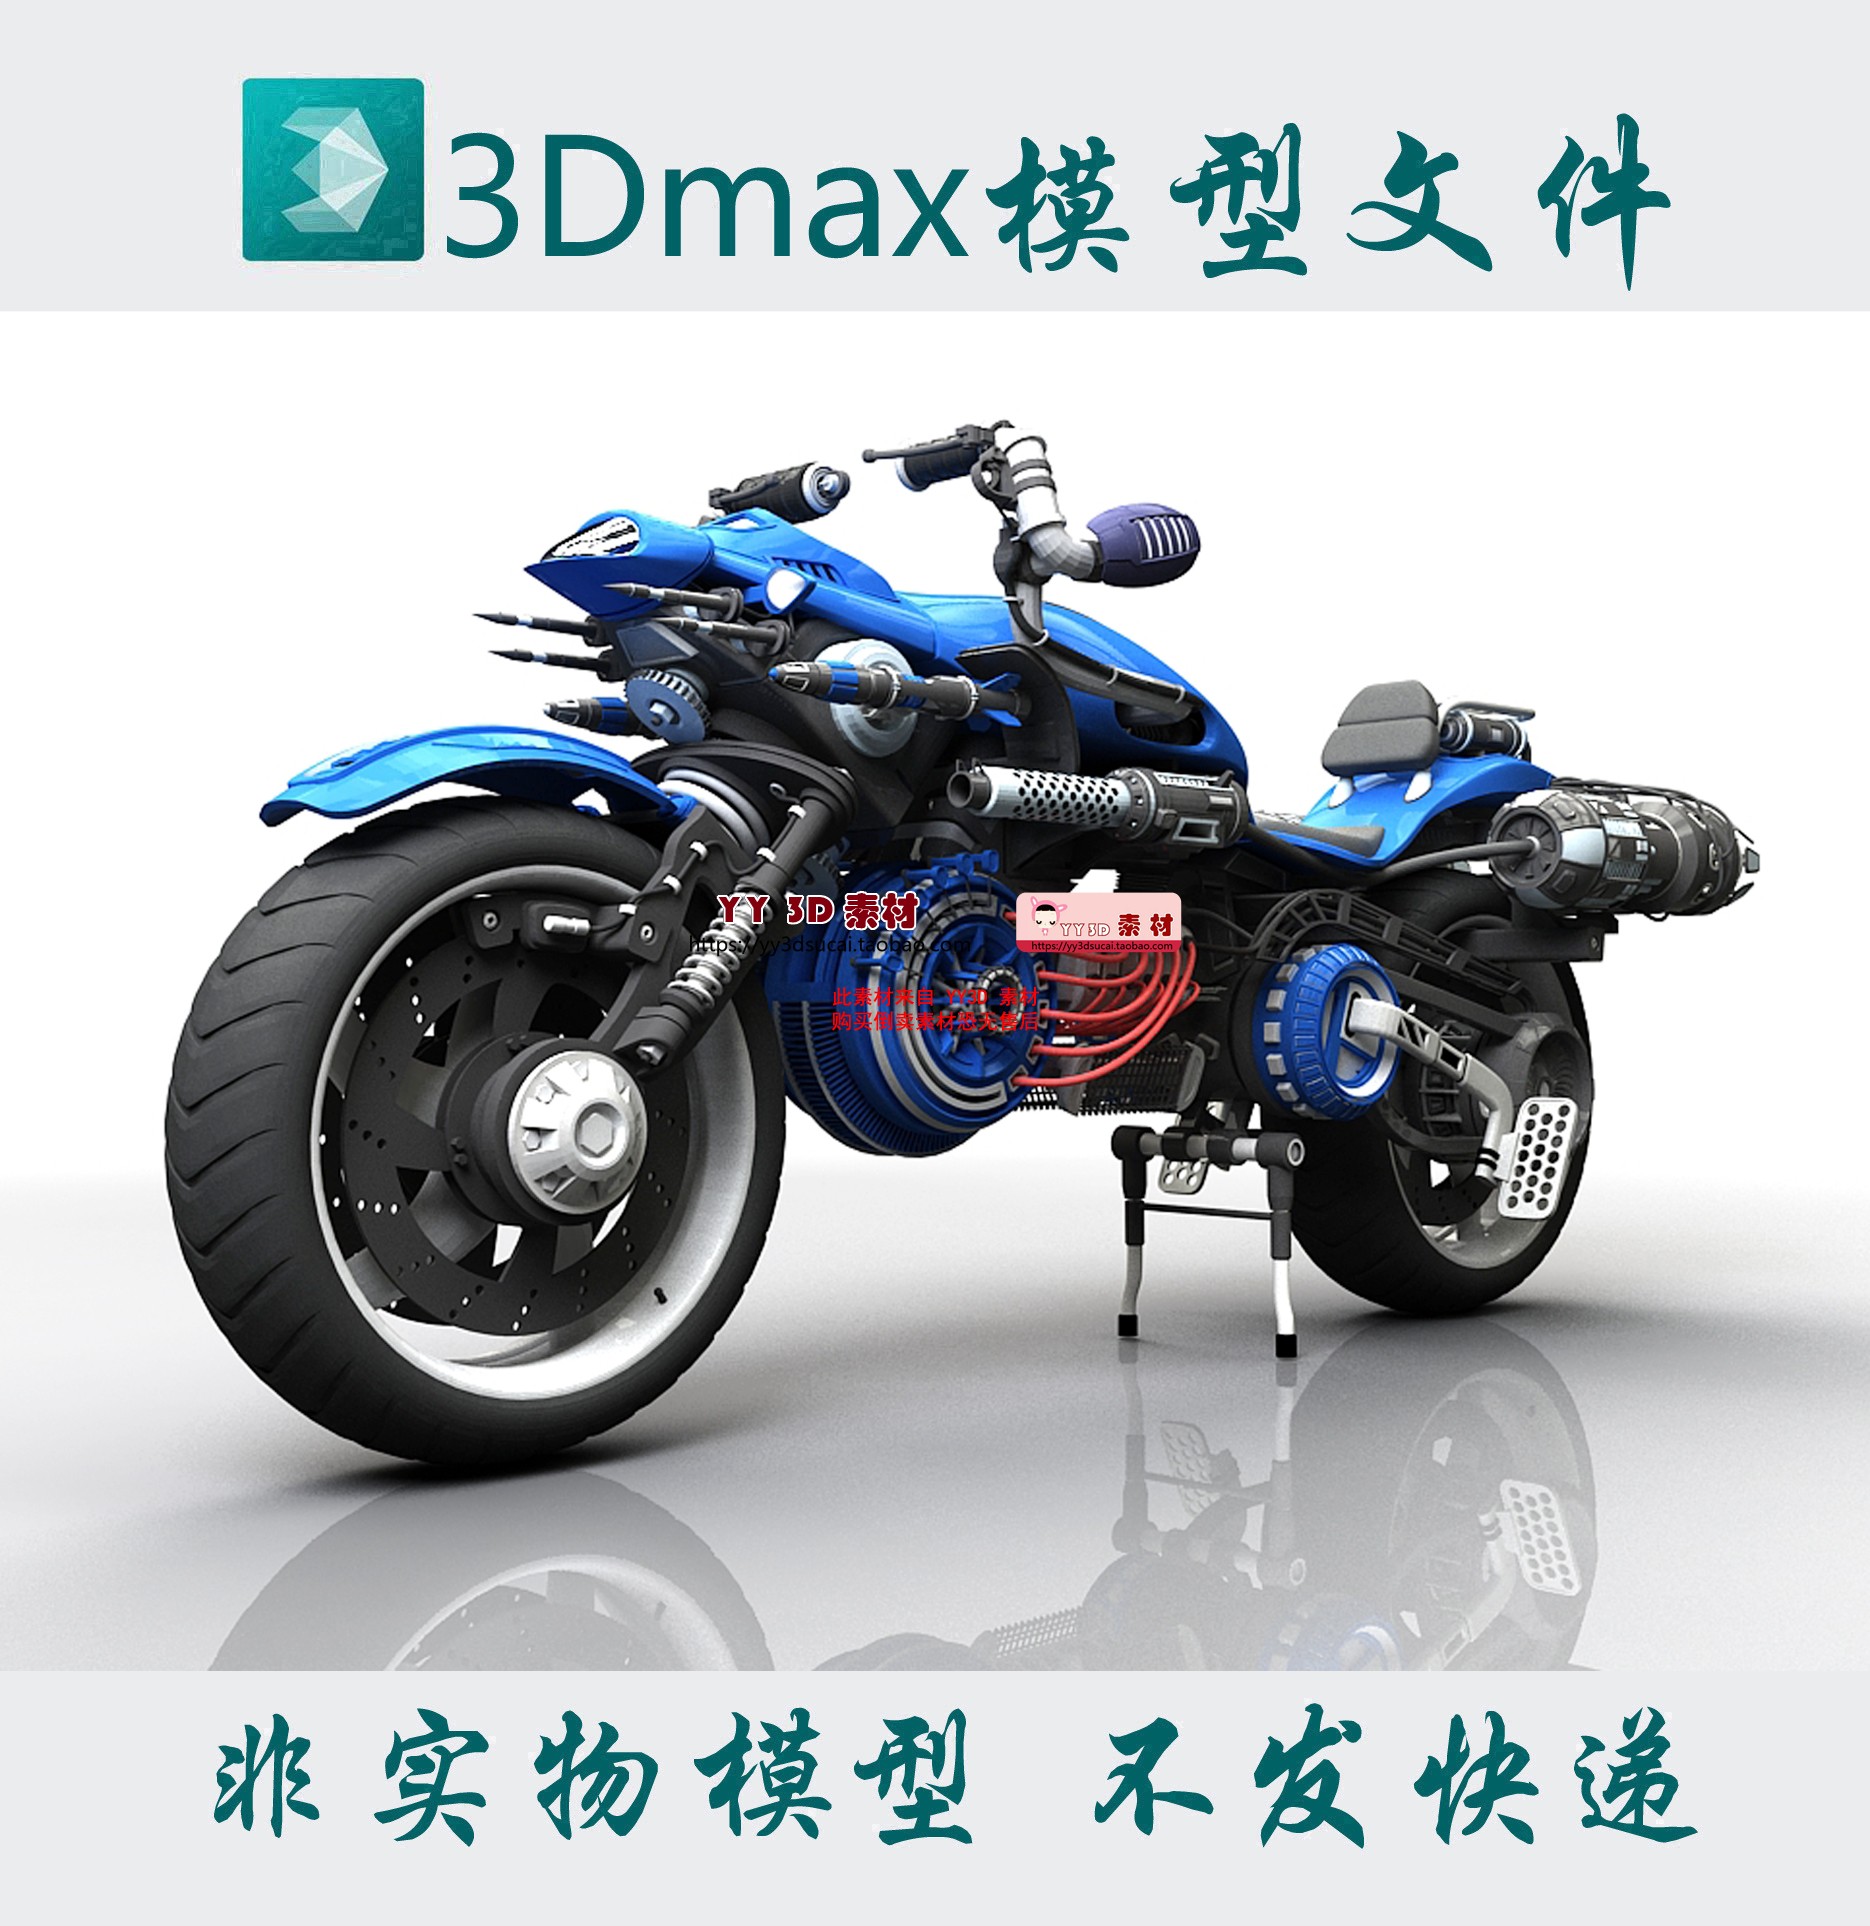 【m0819】科幻喷气摩托3dmax模型科幻炫酷摩托机车3d科幻摩托fbx